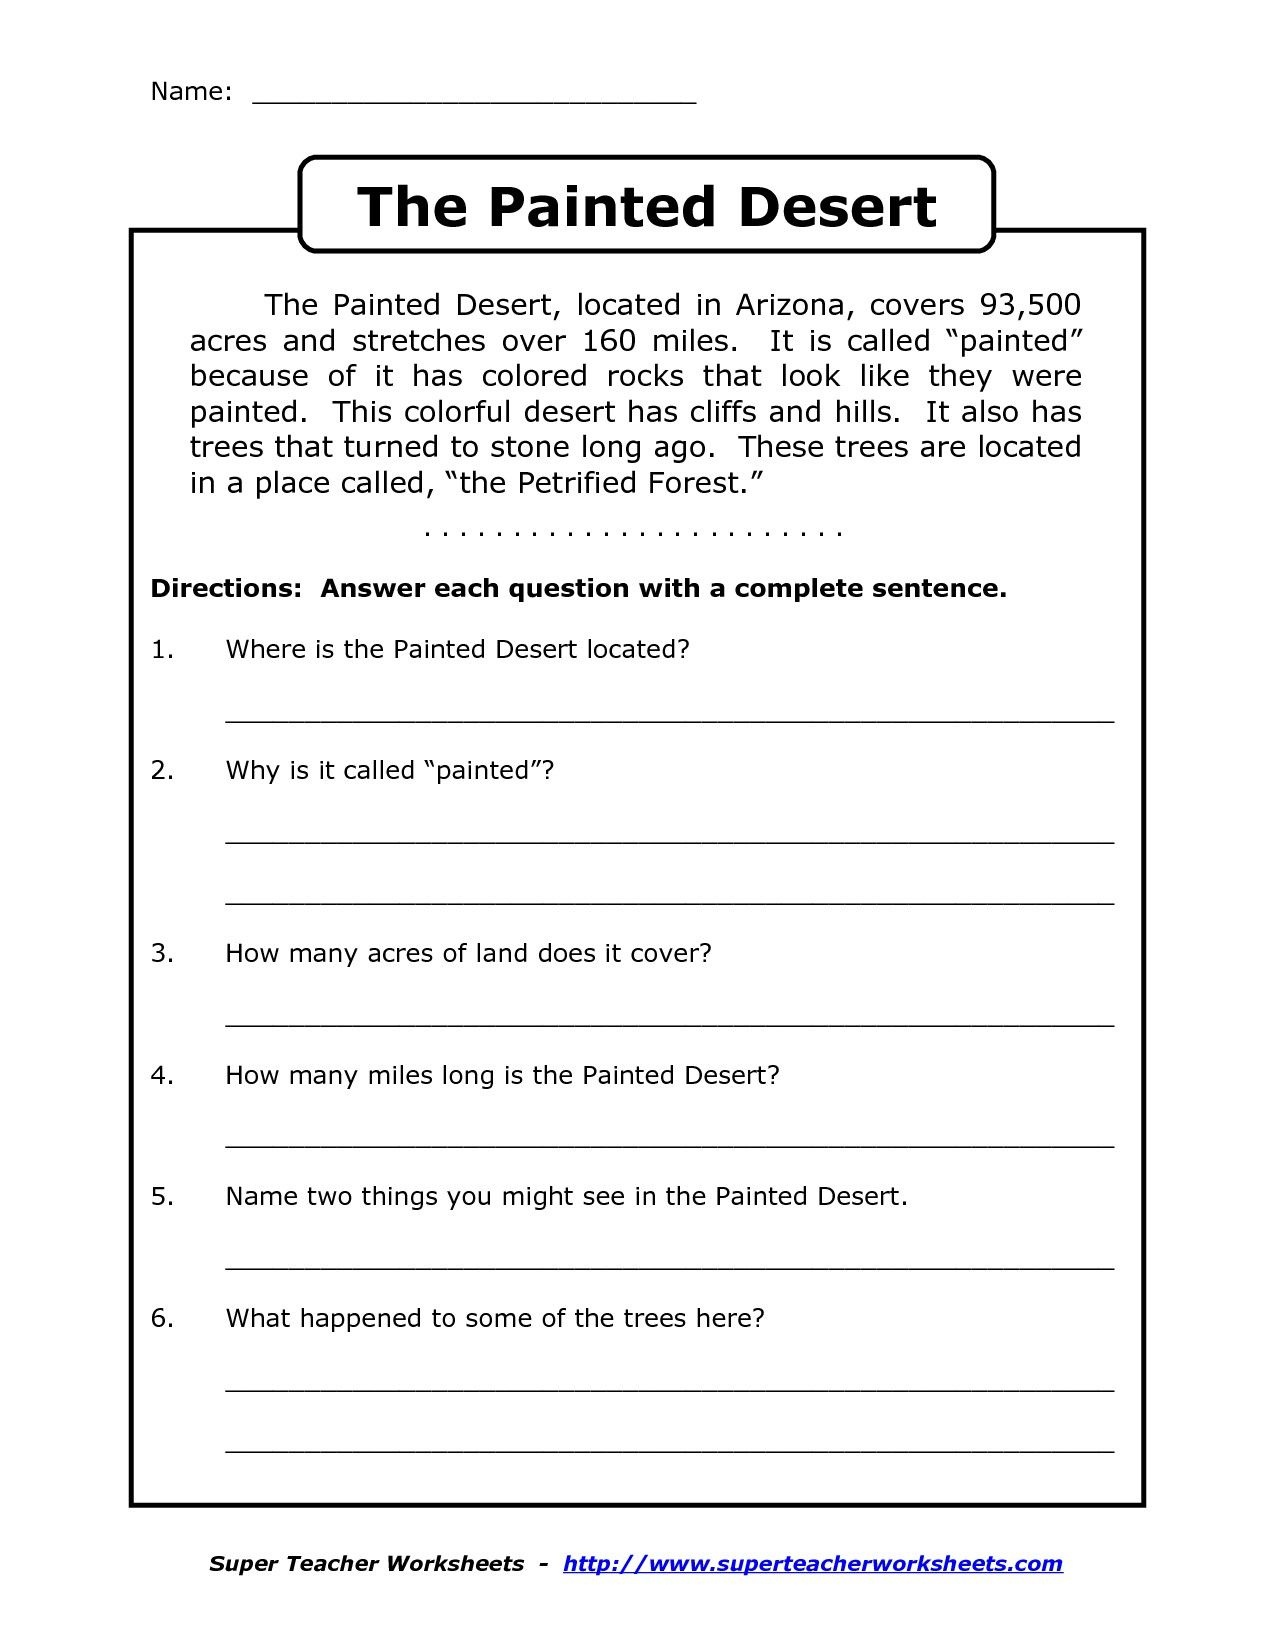 Image Result For Free Printable Worksheets For Grade 4 Comprehension - Free Printable Reading Comprehension Worksheets For Adults